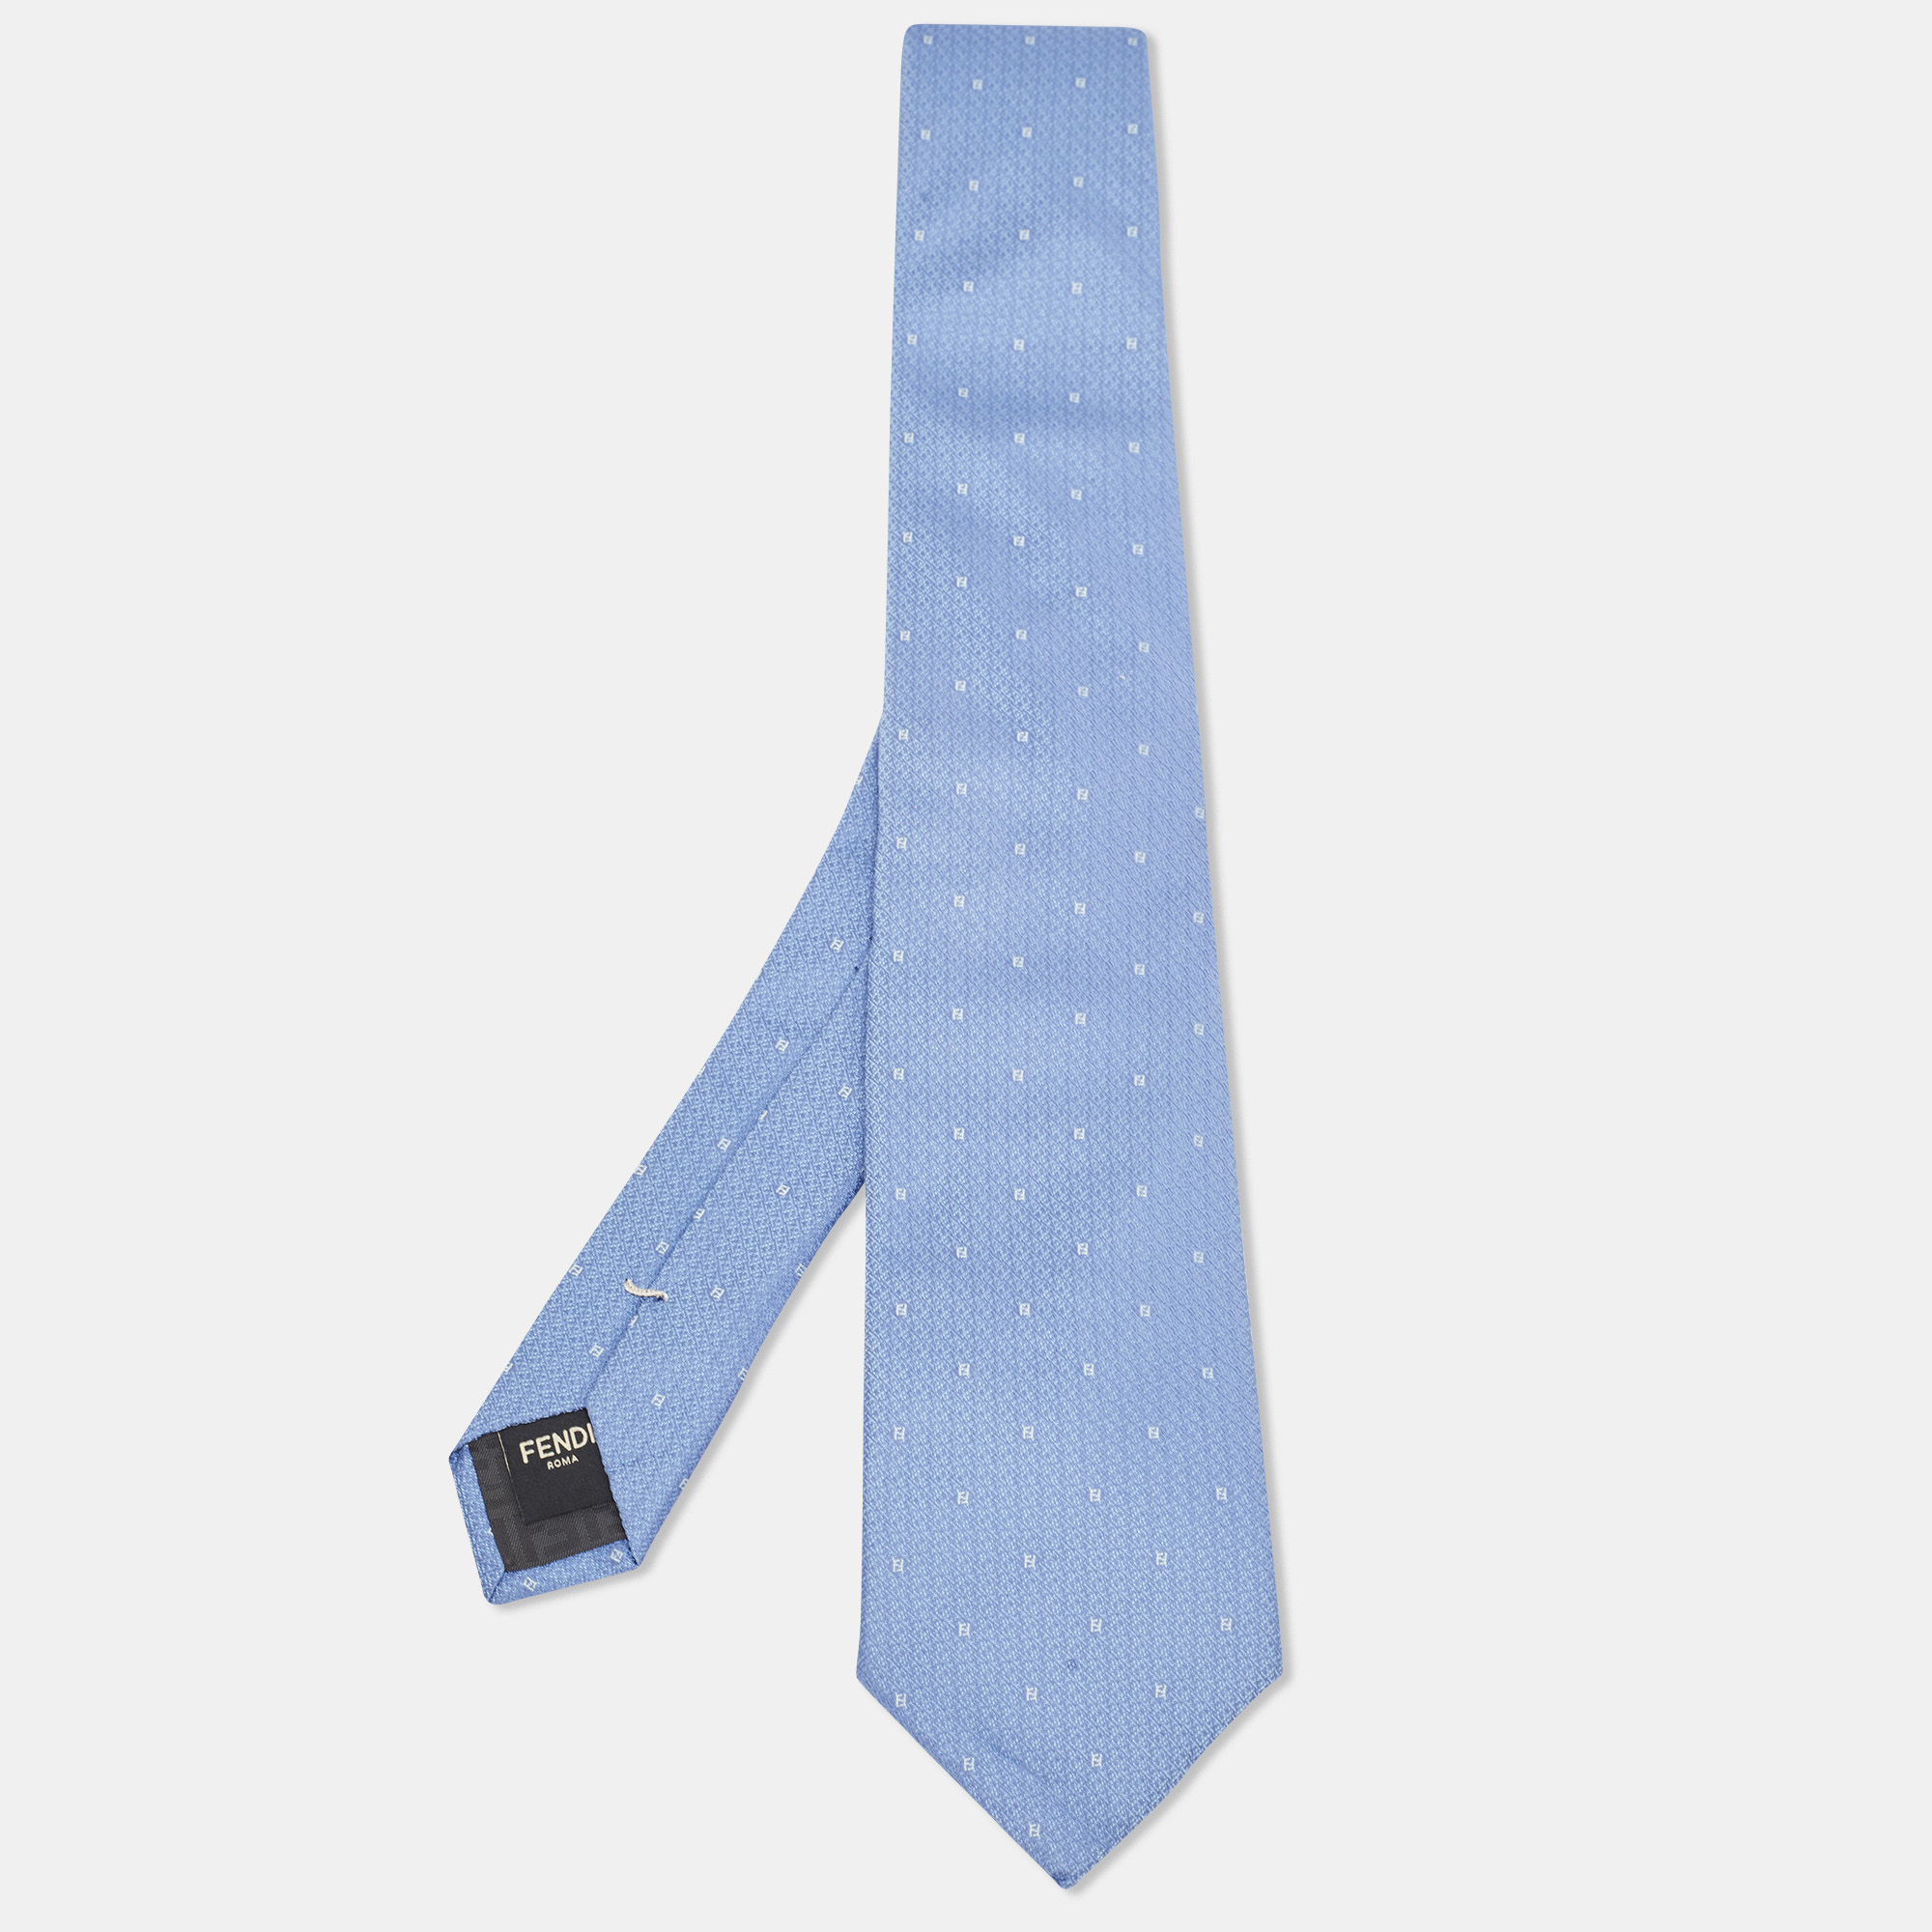 Fendi blue ff pattern silk tie